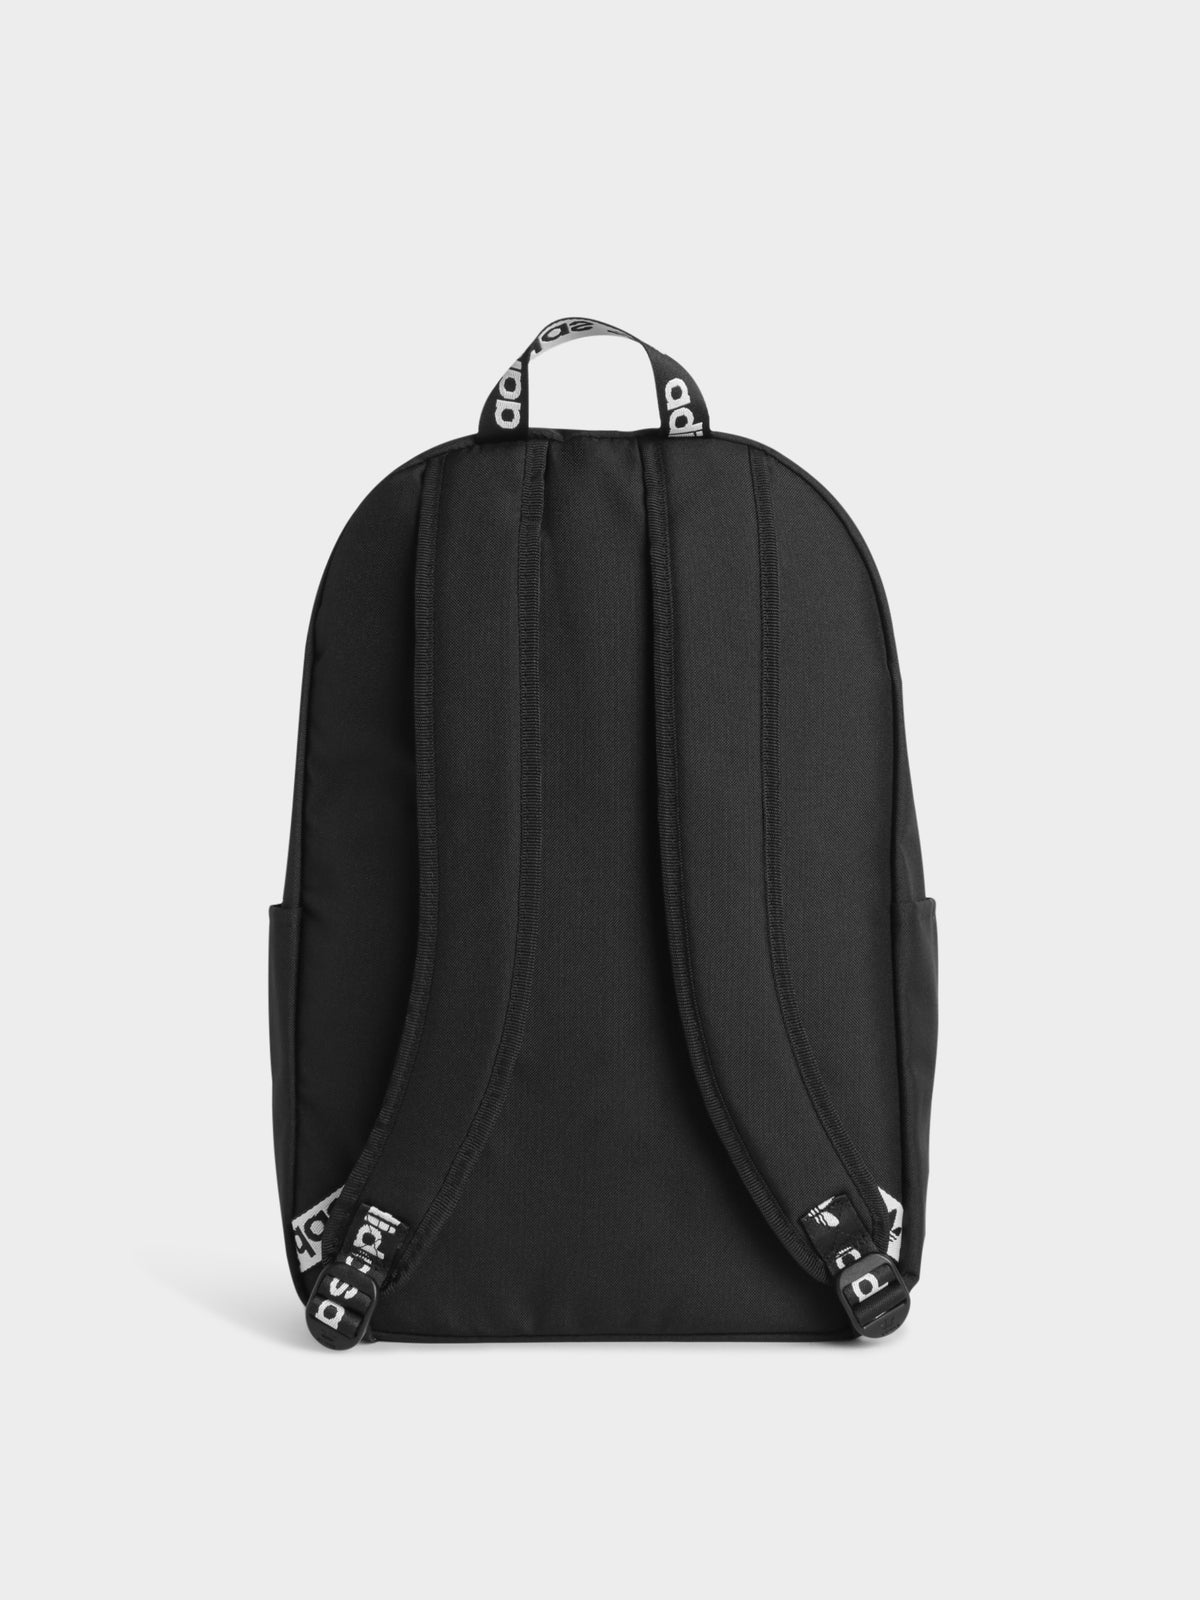 Adicolour Backpack in Black